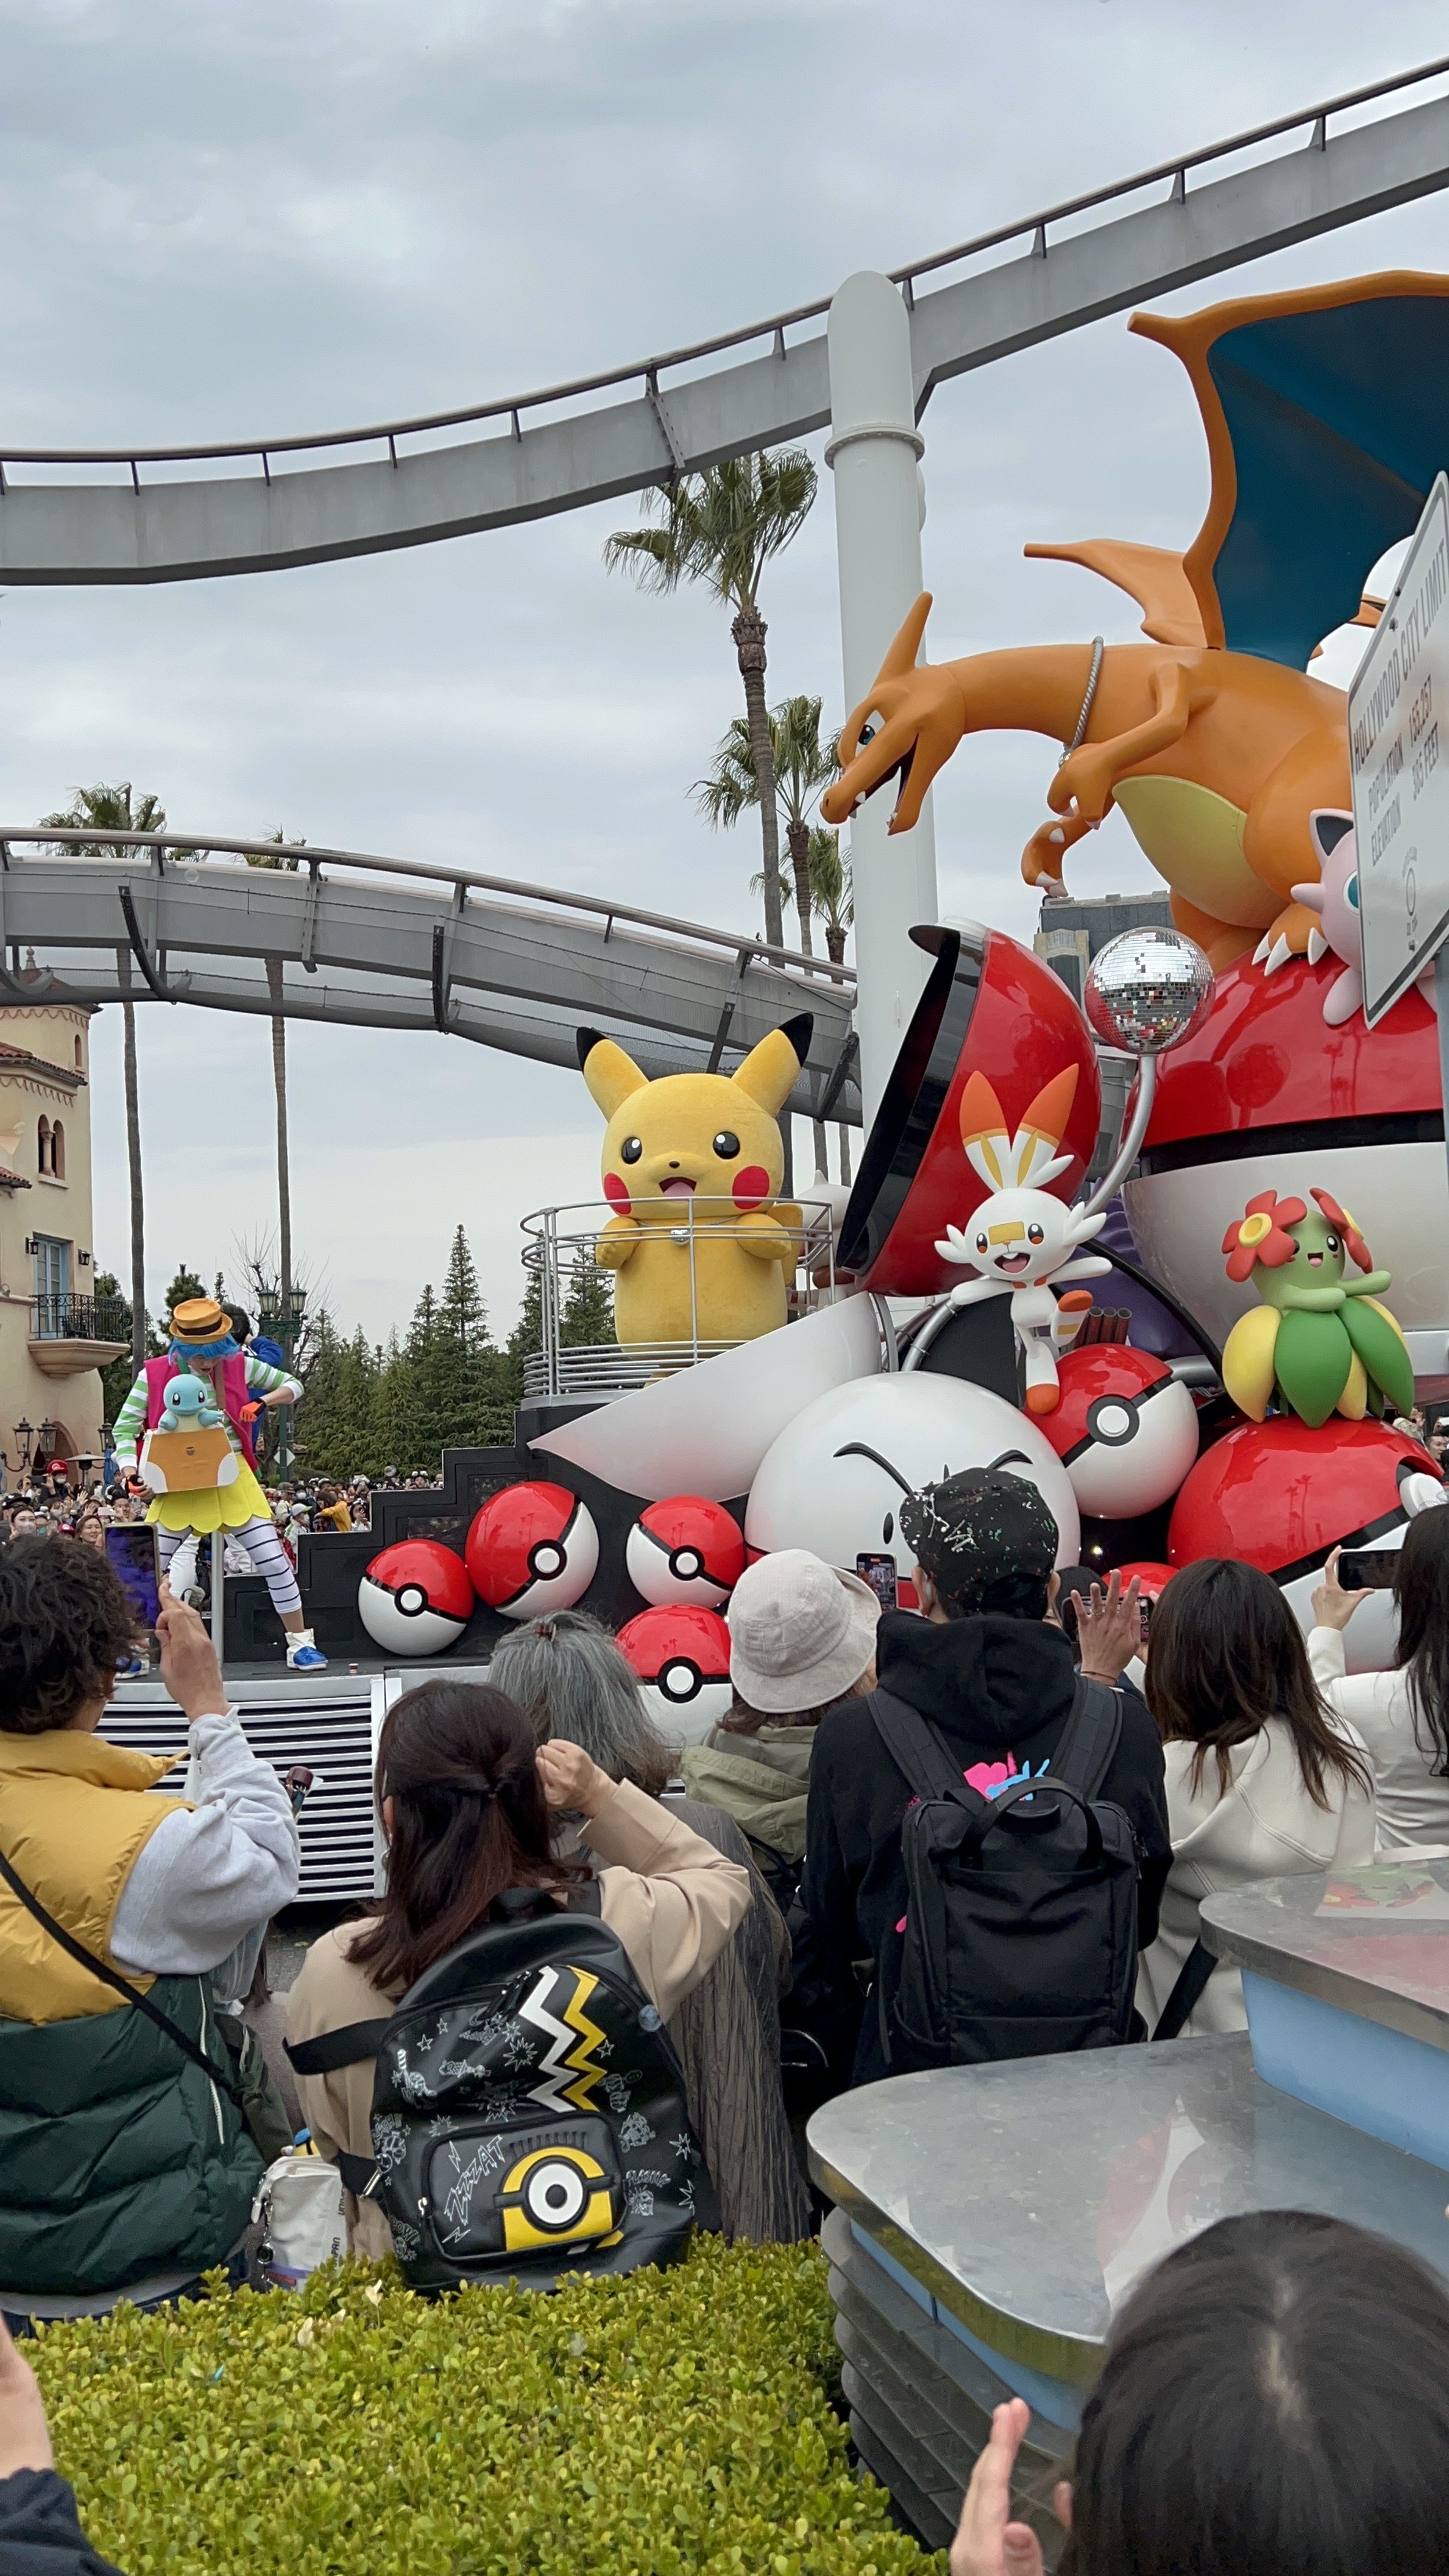  Pikachu, Charizard, and other pokemon on a Pokemon parade float 